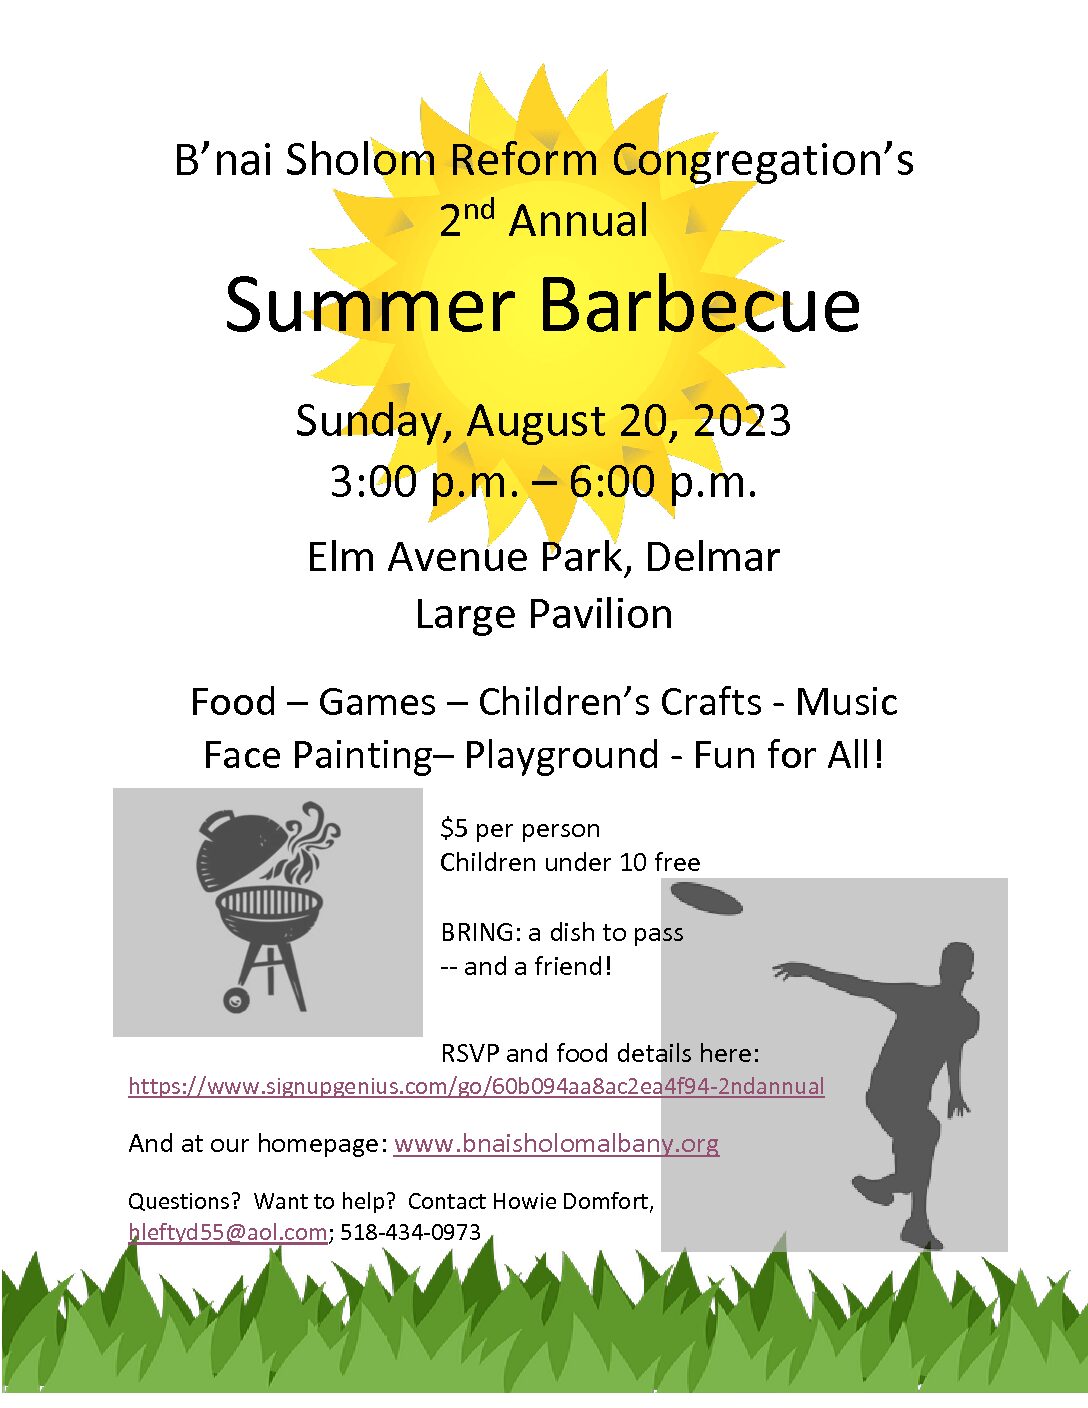 B'nai Sholom's 2nd Annual Summer Barbecue